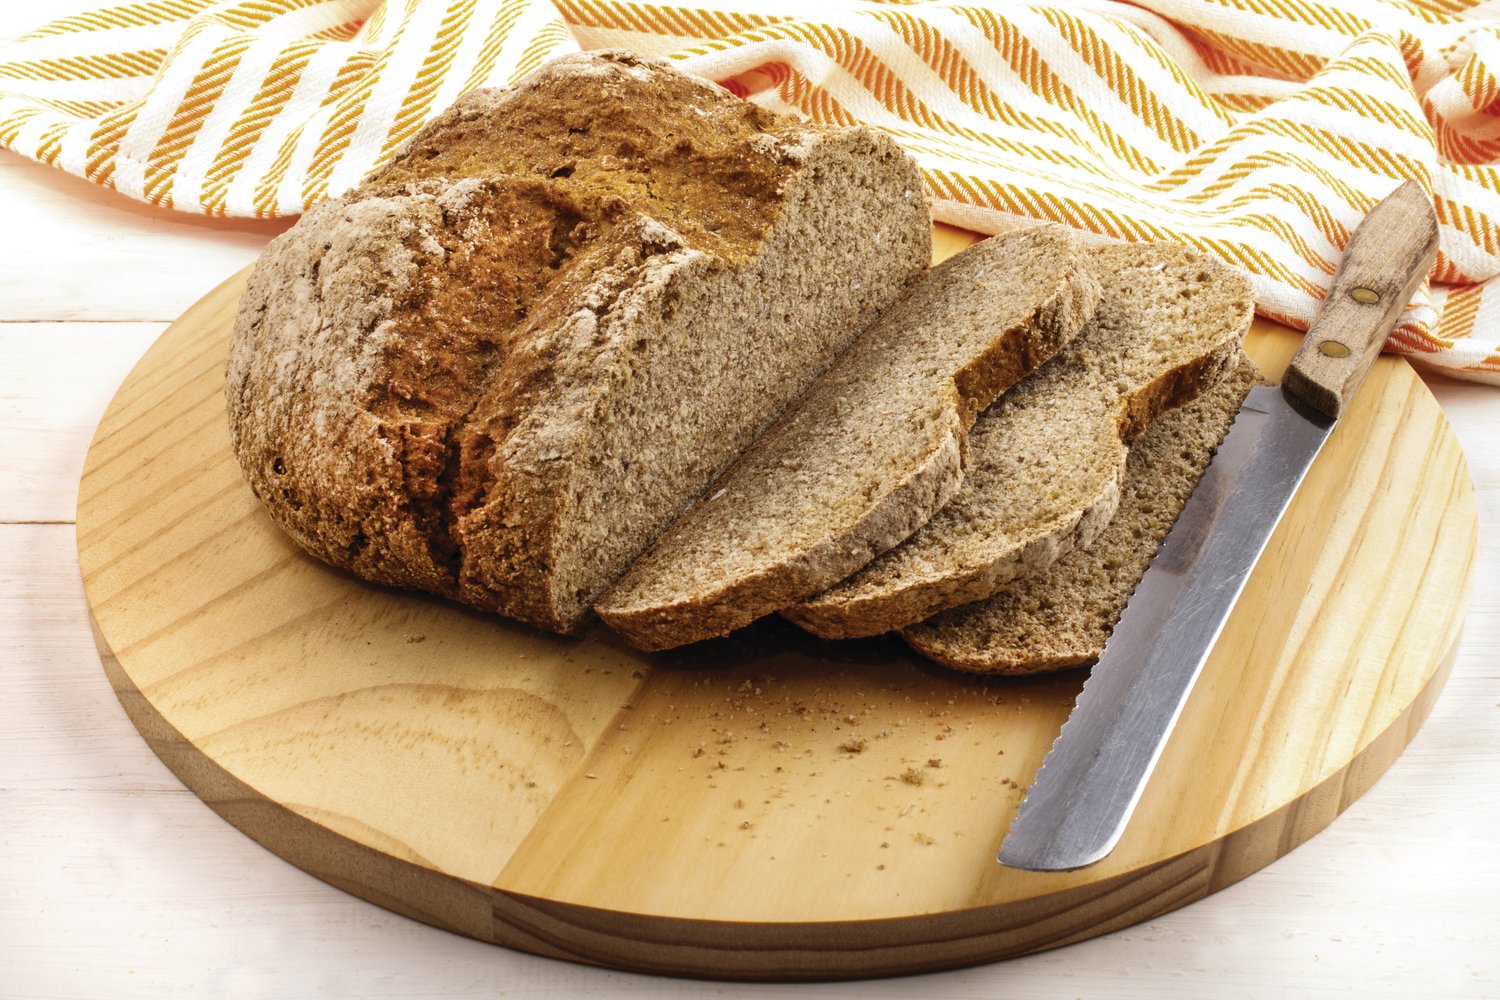 Traditional Irish Soda bread uses just a few ingredients.